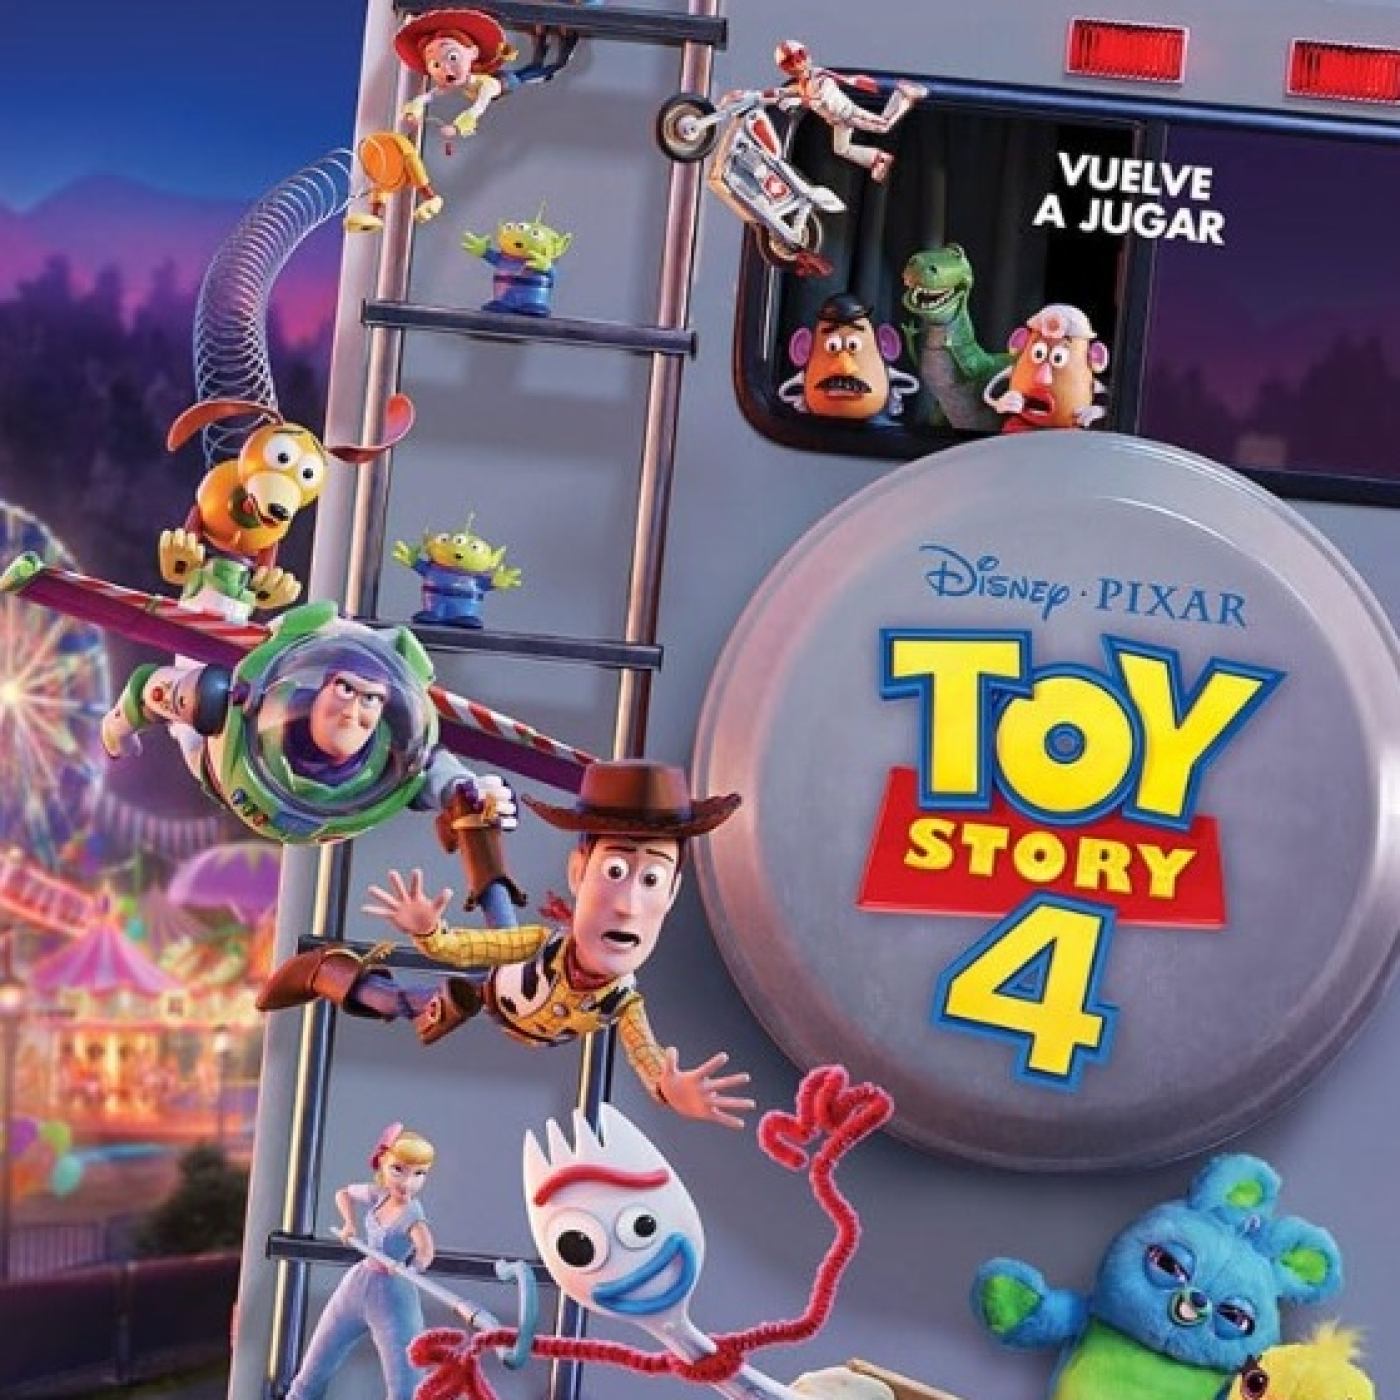 Peticiones Oyentes - Toy Story 4 - 2019